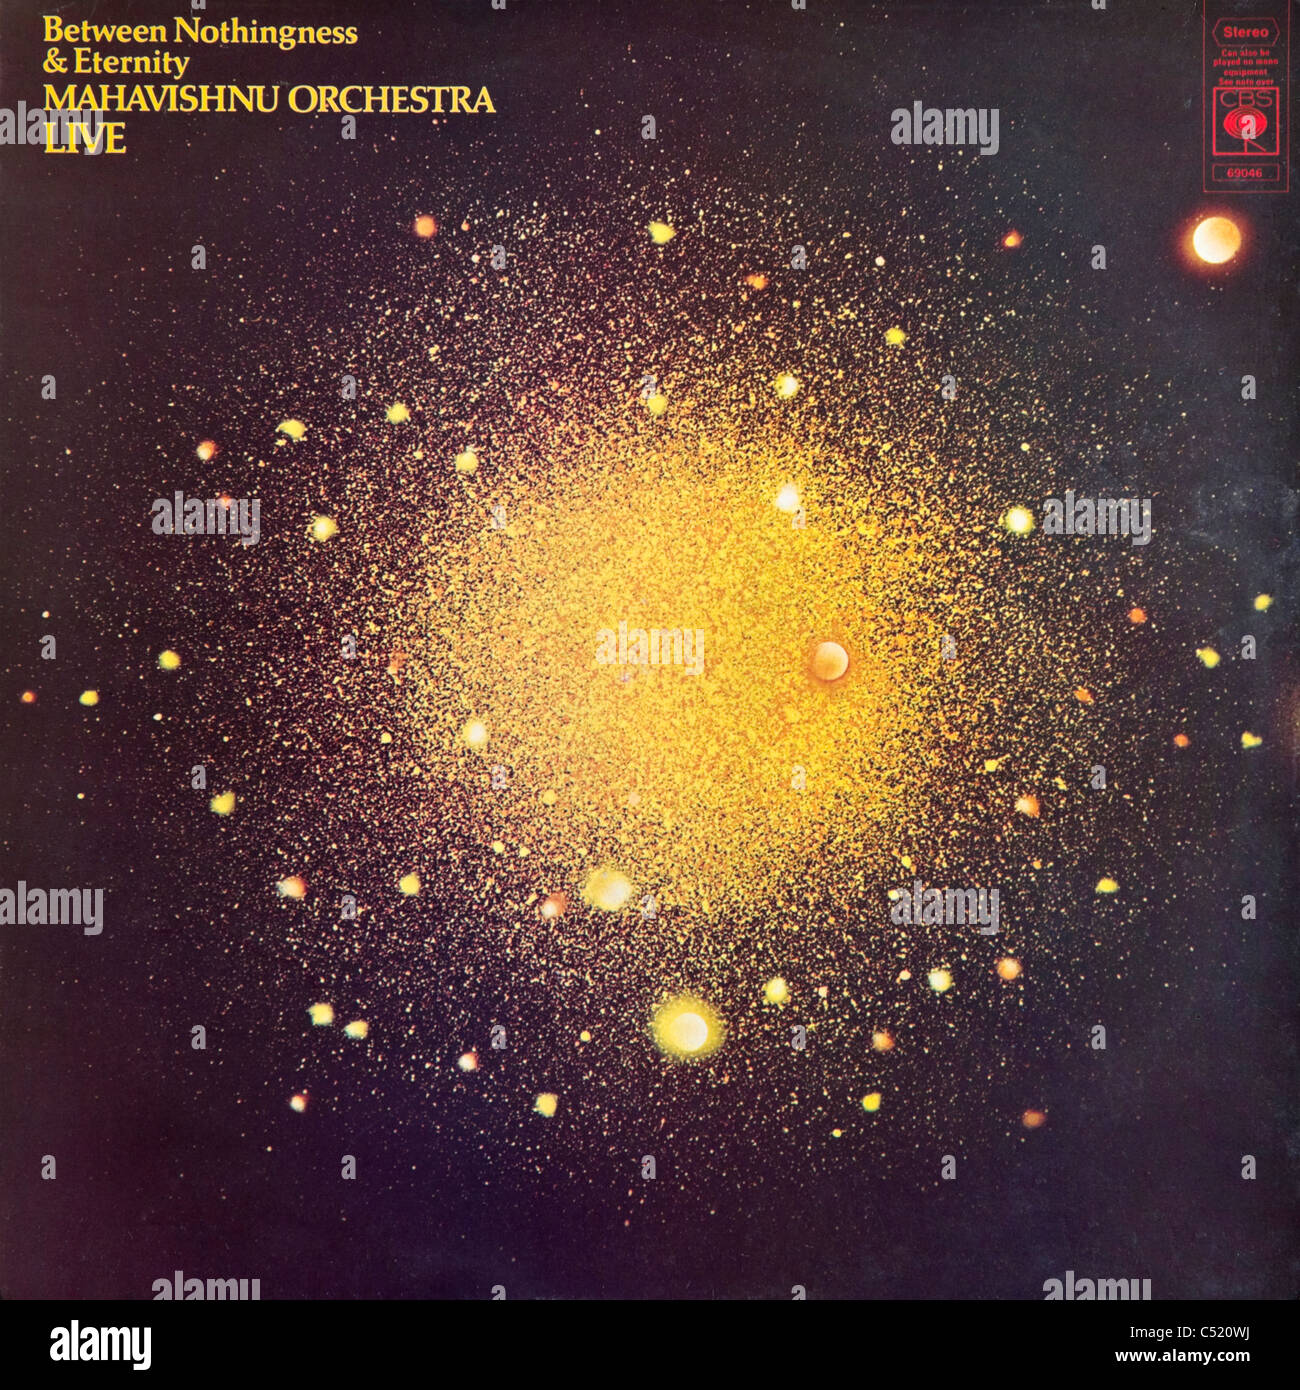 Cover of vinyl album Between Nothingness and Eternity by Mahavishnu Orchestra released 1973 on CBS Records Stock Photo